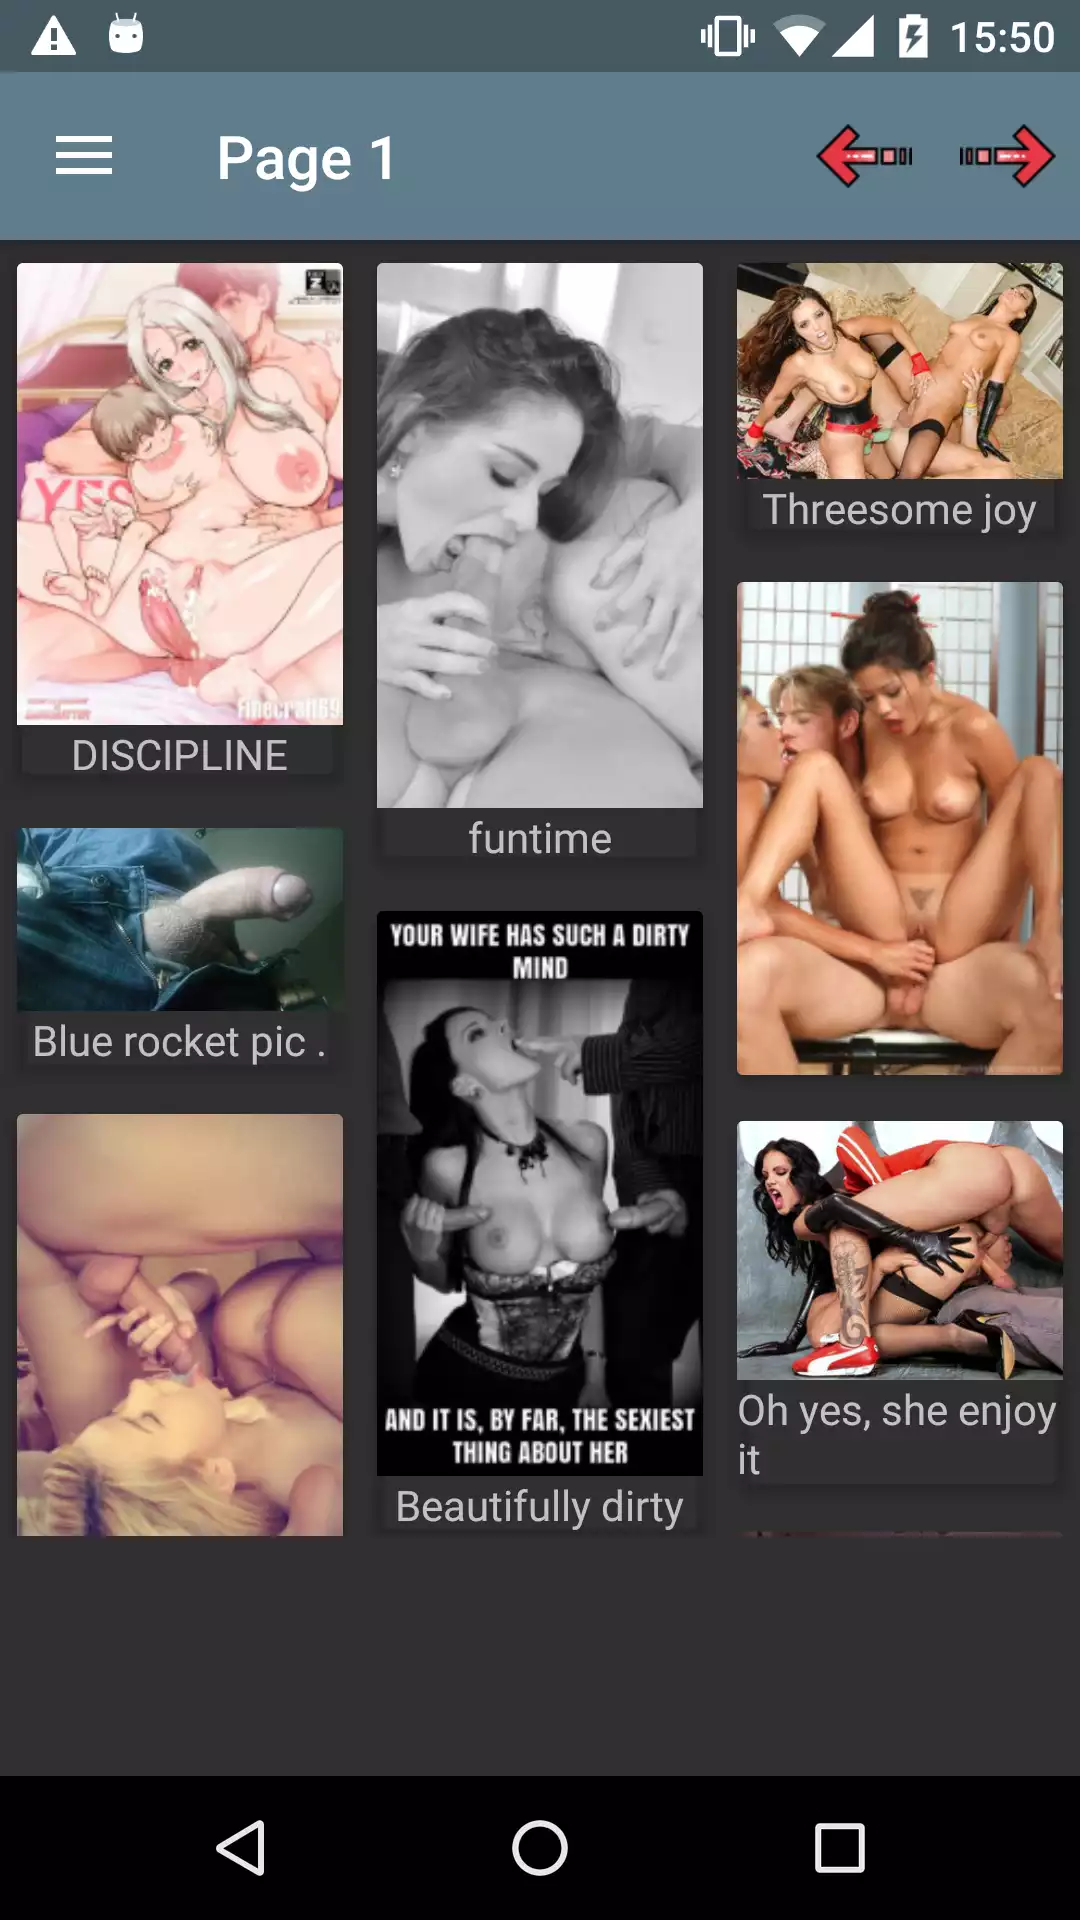 Threesomes hot,pics,jay,adult,anime,sexy,play,hentai,download,picture,photos,image,app,hintai,porn,wallpaper,pornstar,photo,editor,sara,galleries